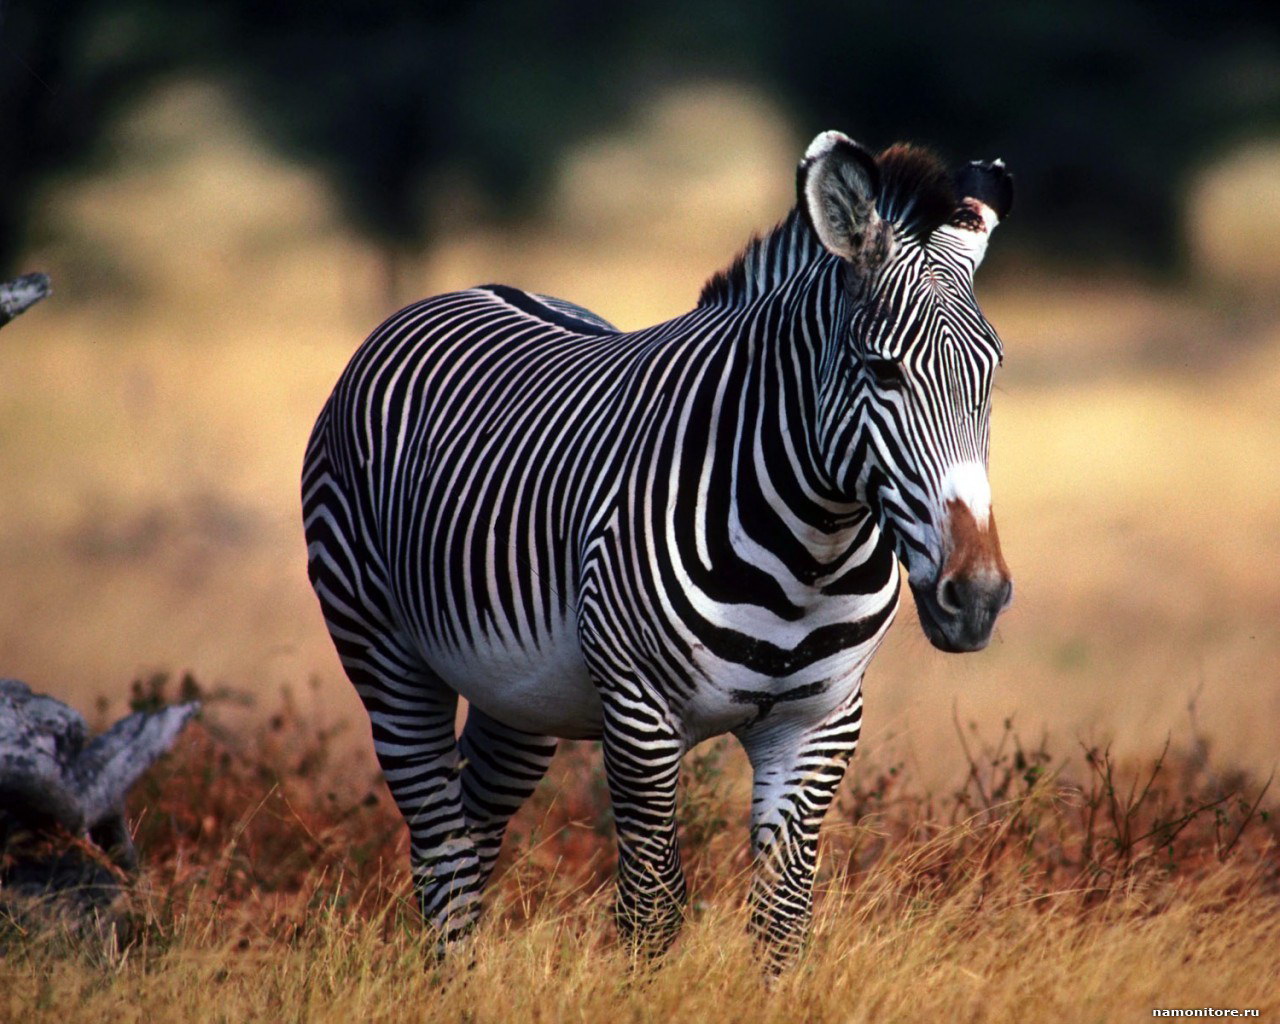 Photo of zebra